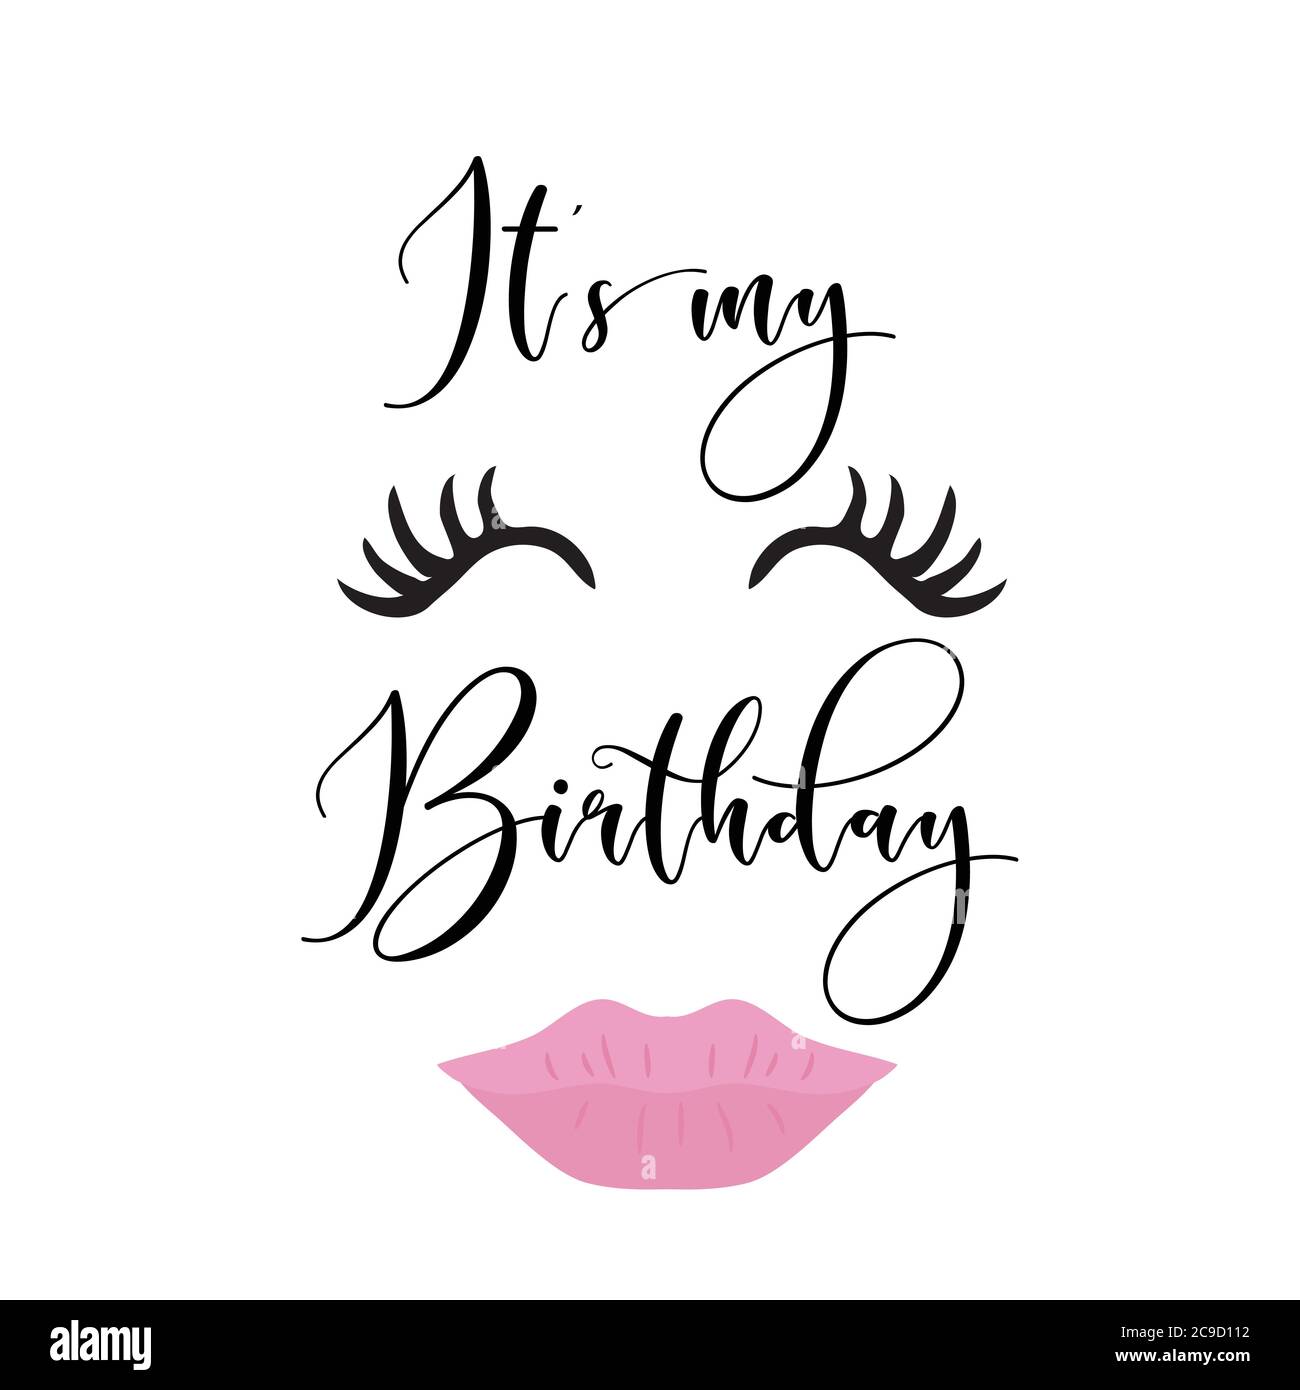 It's Its my birthday day Quote Print Stock Vector Image & Art - Alamy